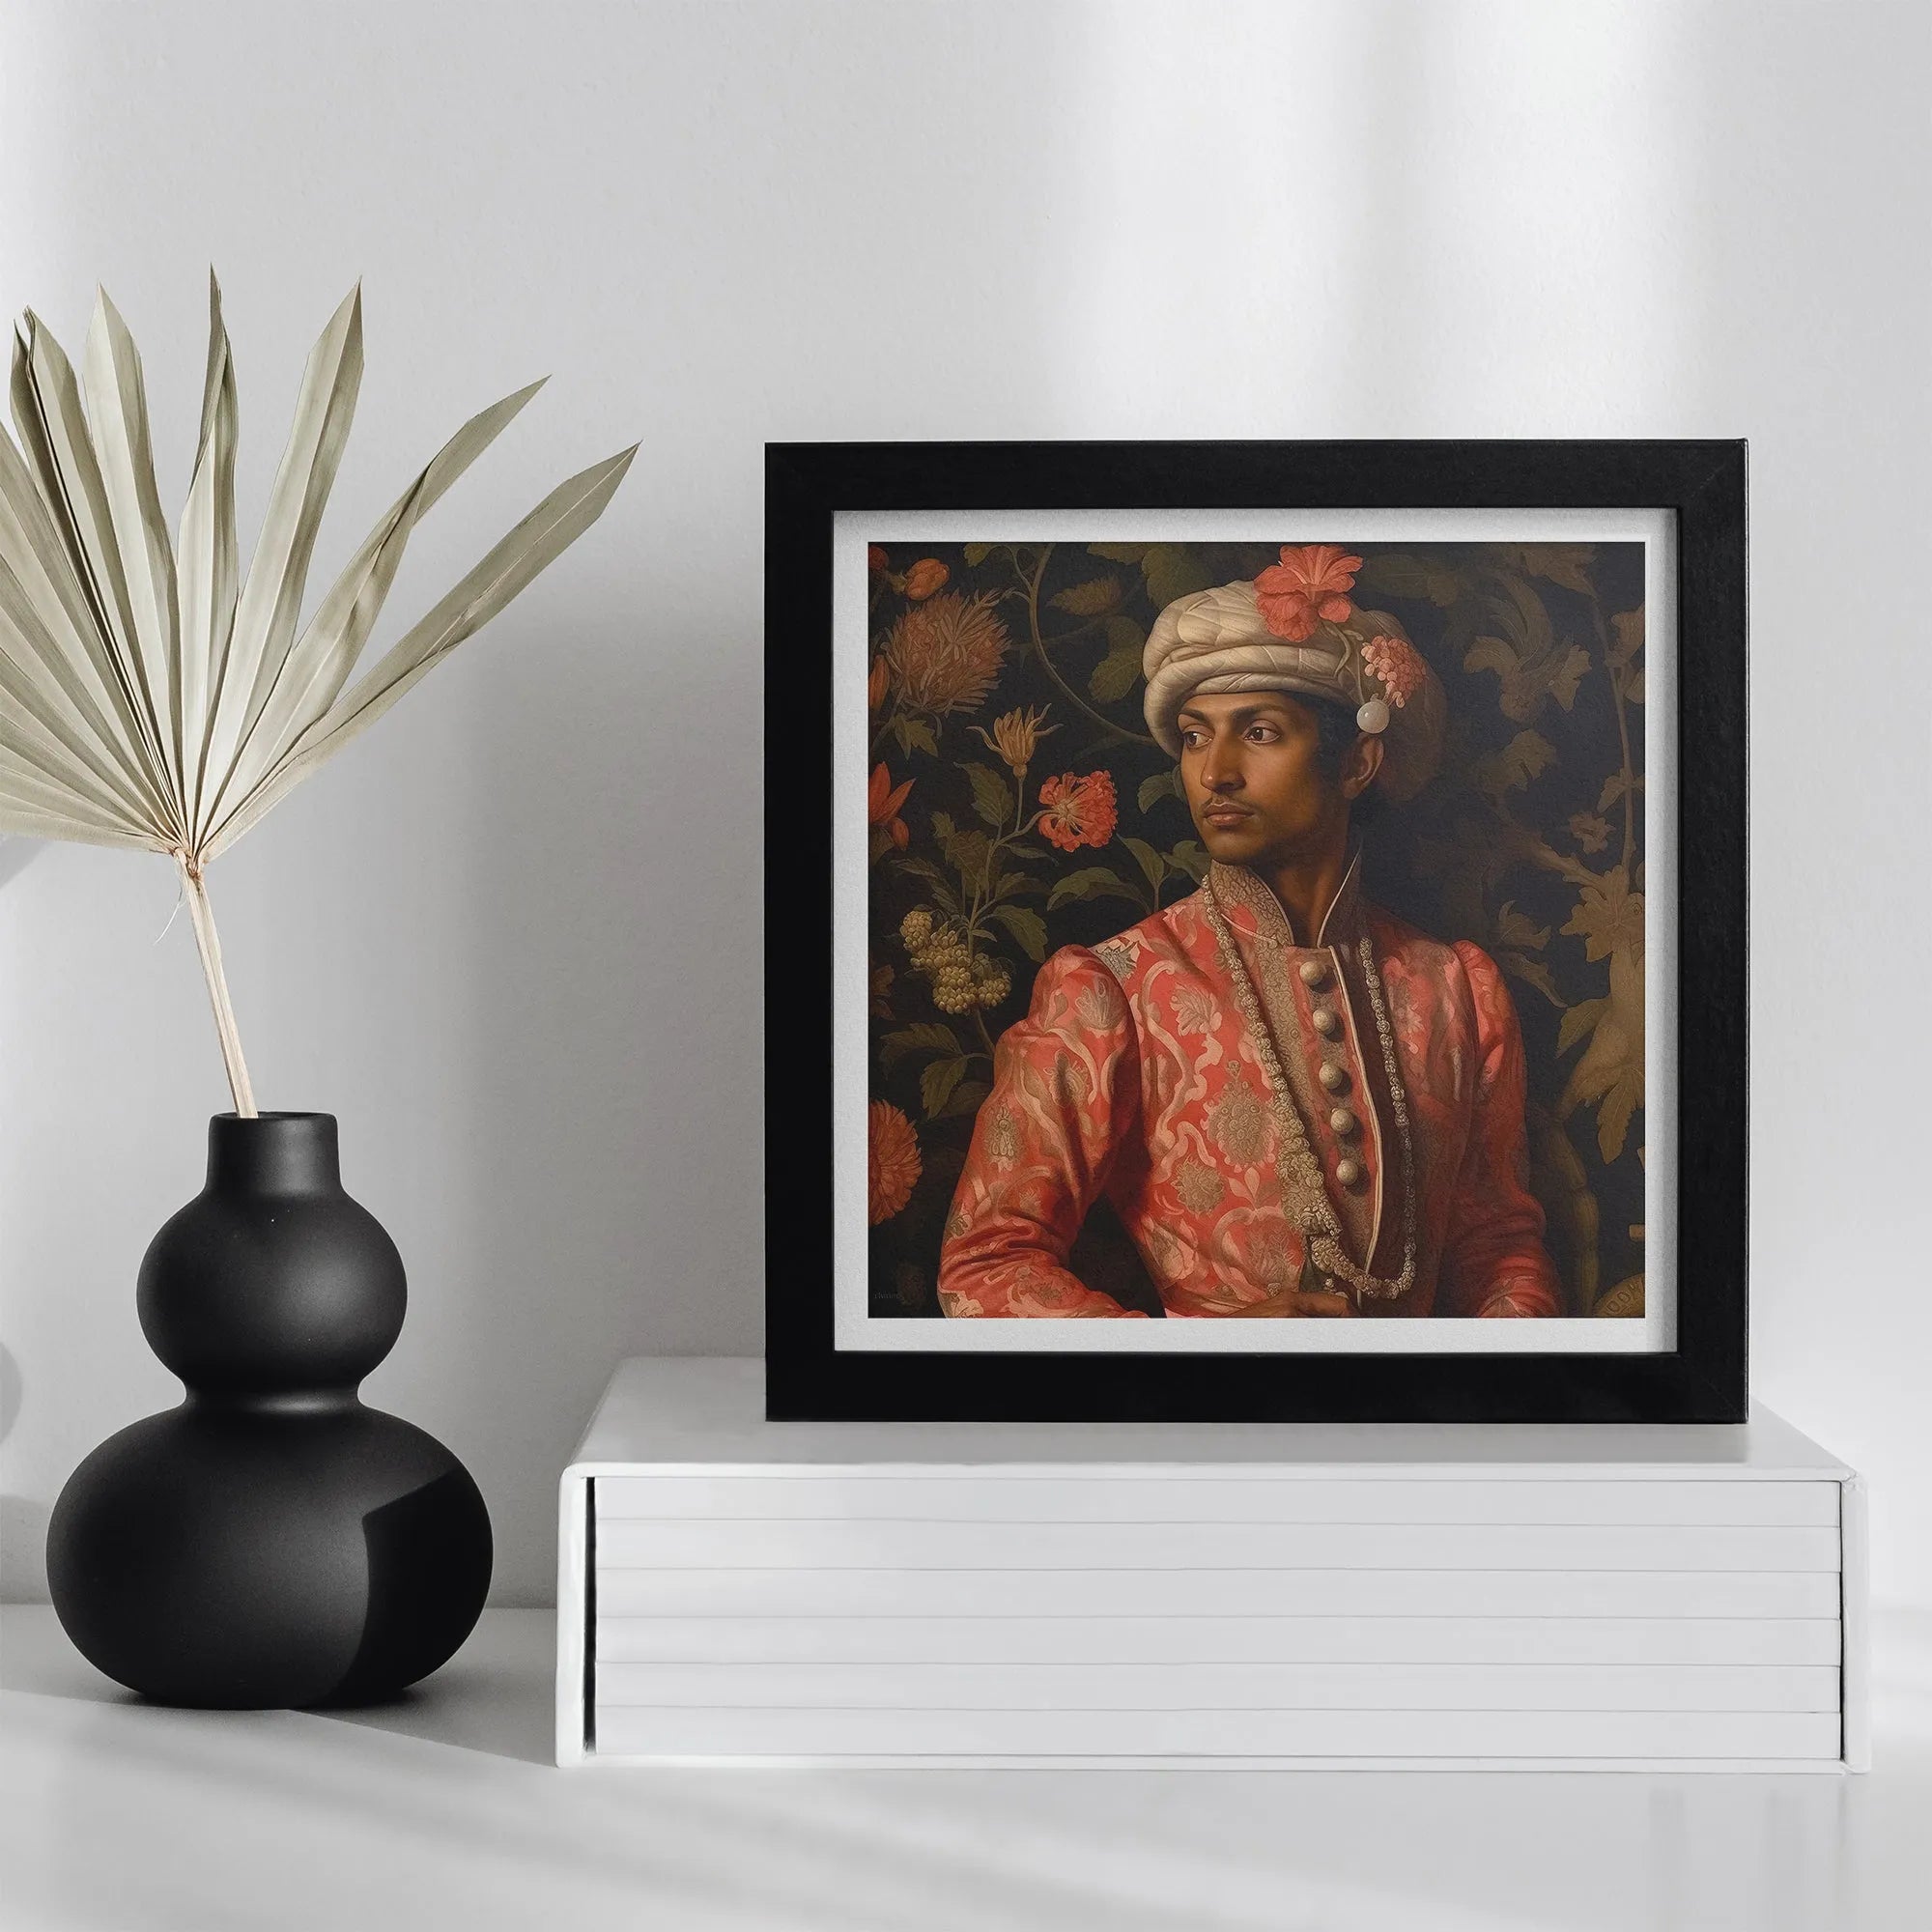 Prince Kaniyan - Gay India Tamil Royalty Queerart Print - 12’x12’ - Posters Prints & Visual Artwork - Aesthetic Art